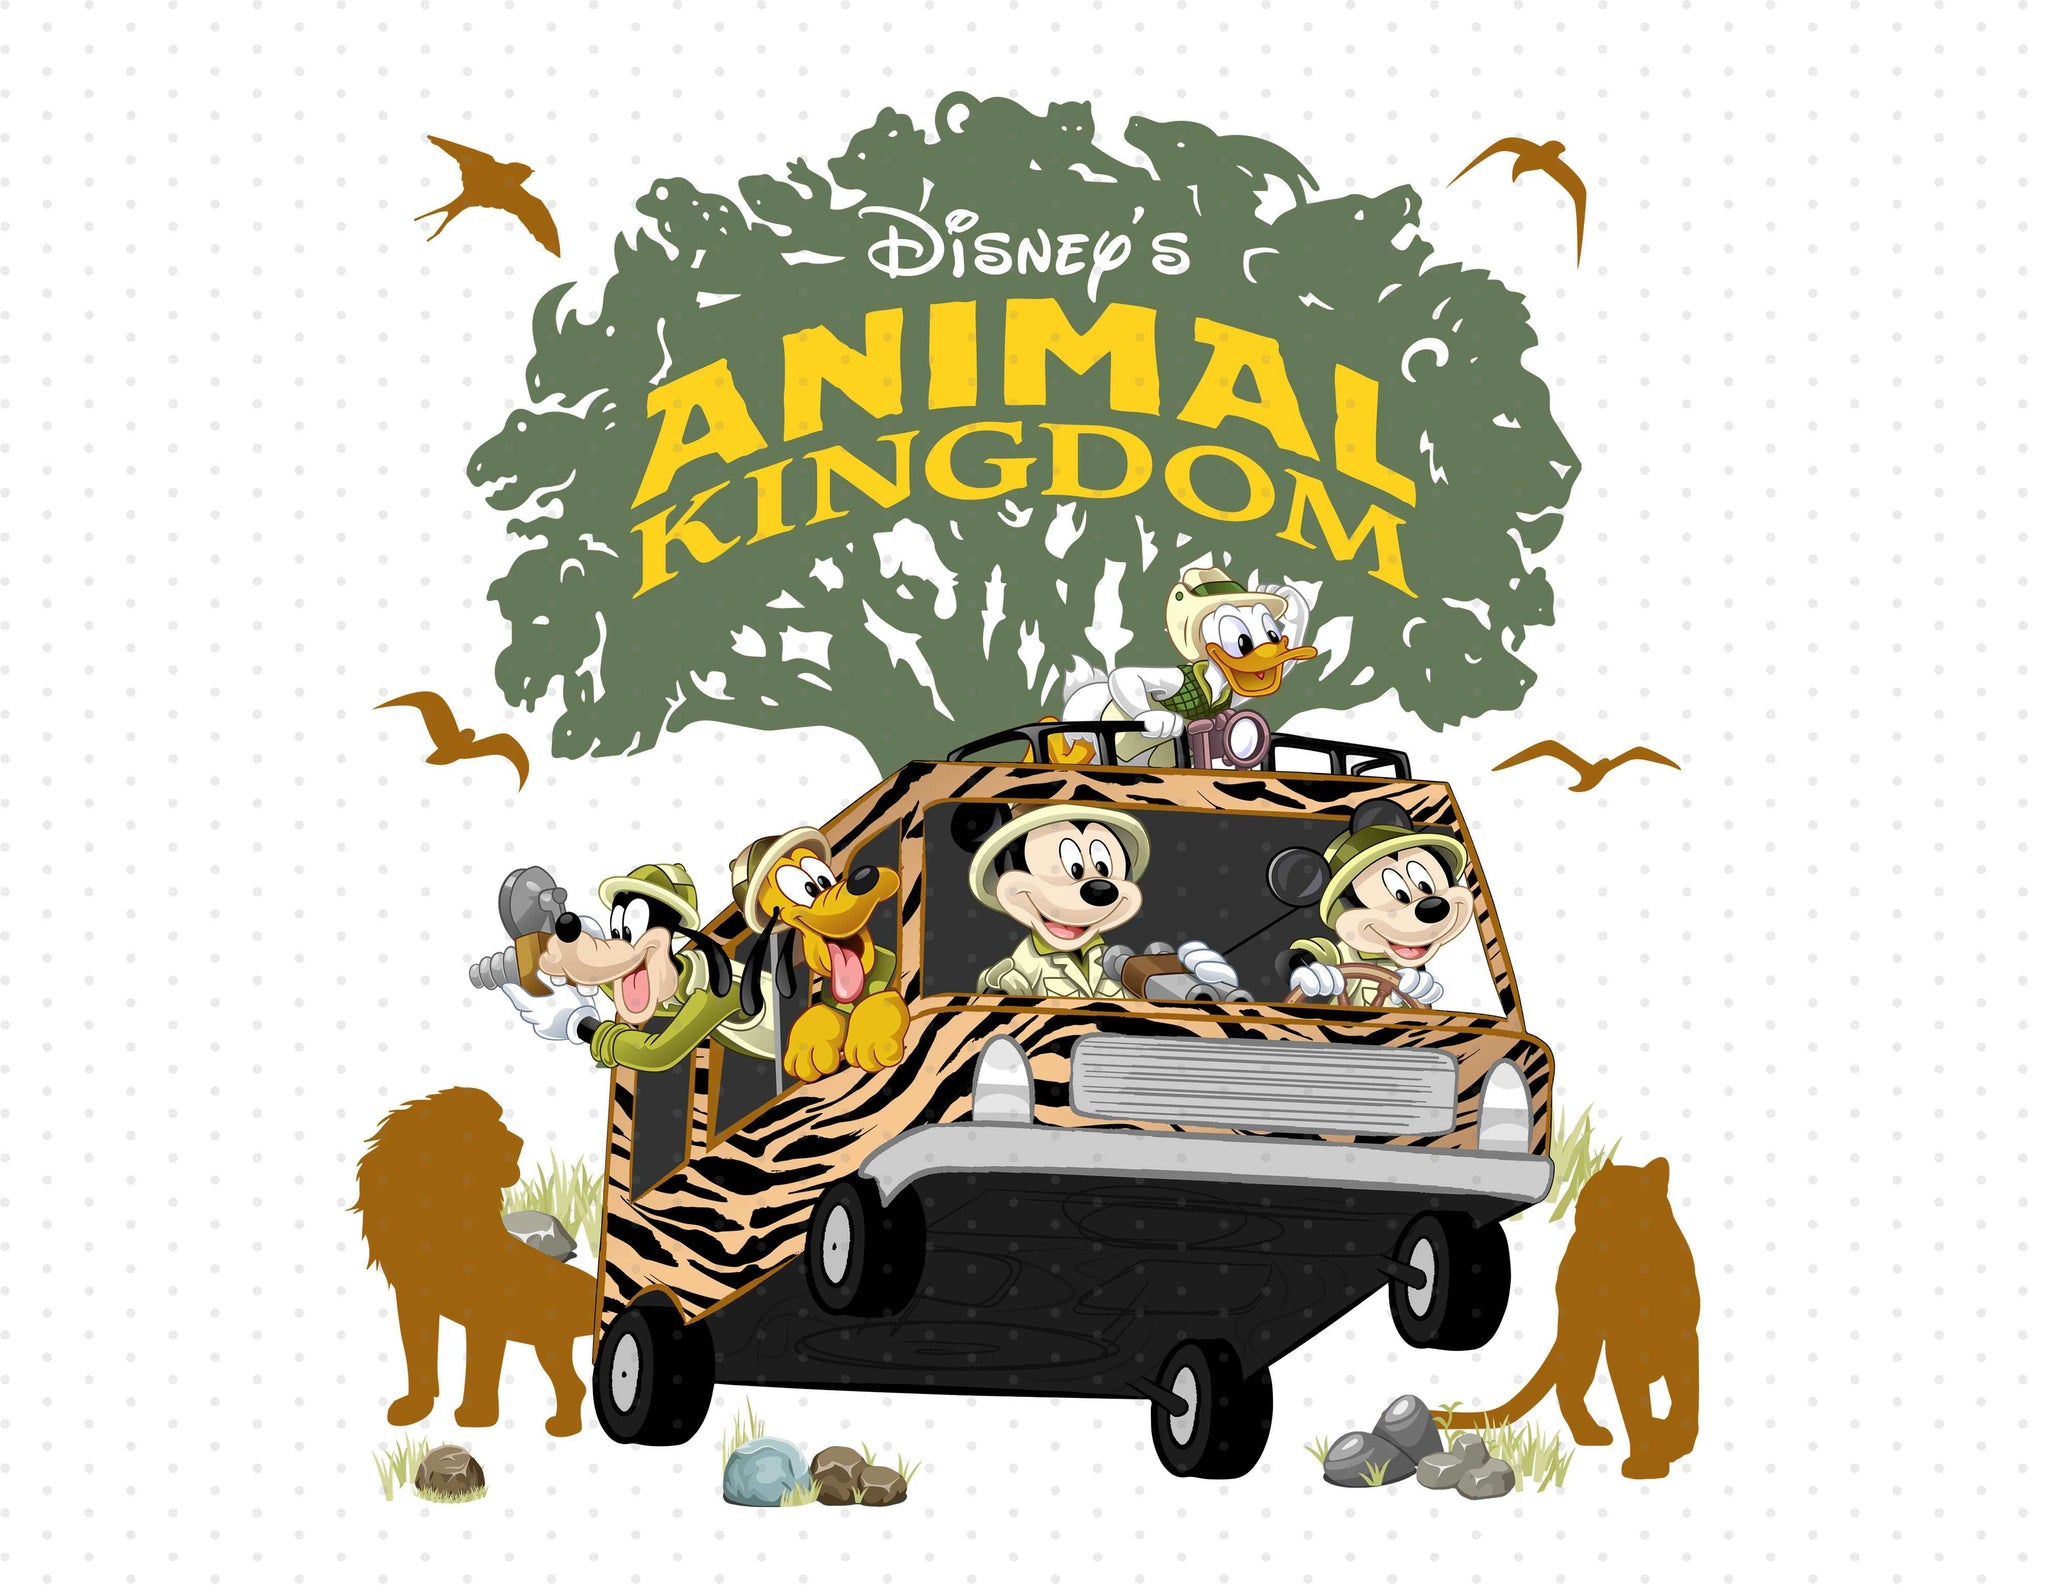 animal kingdom logo